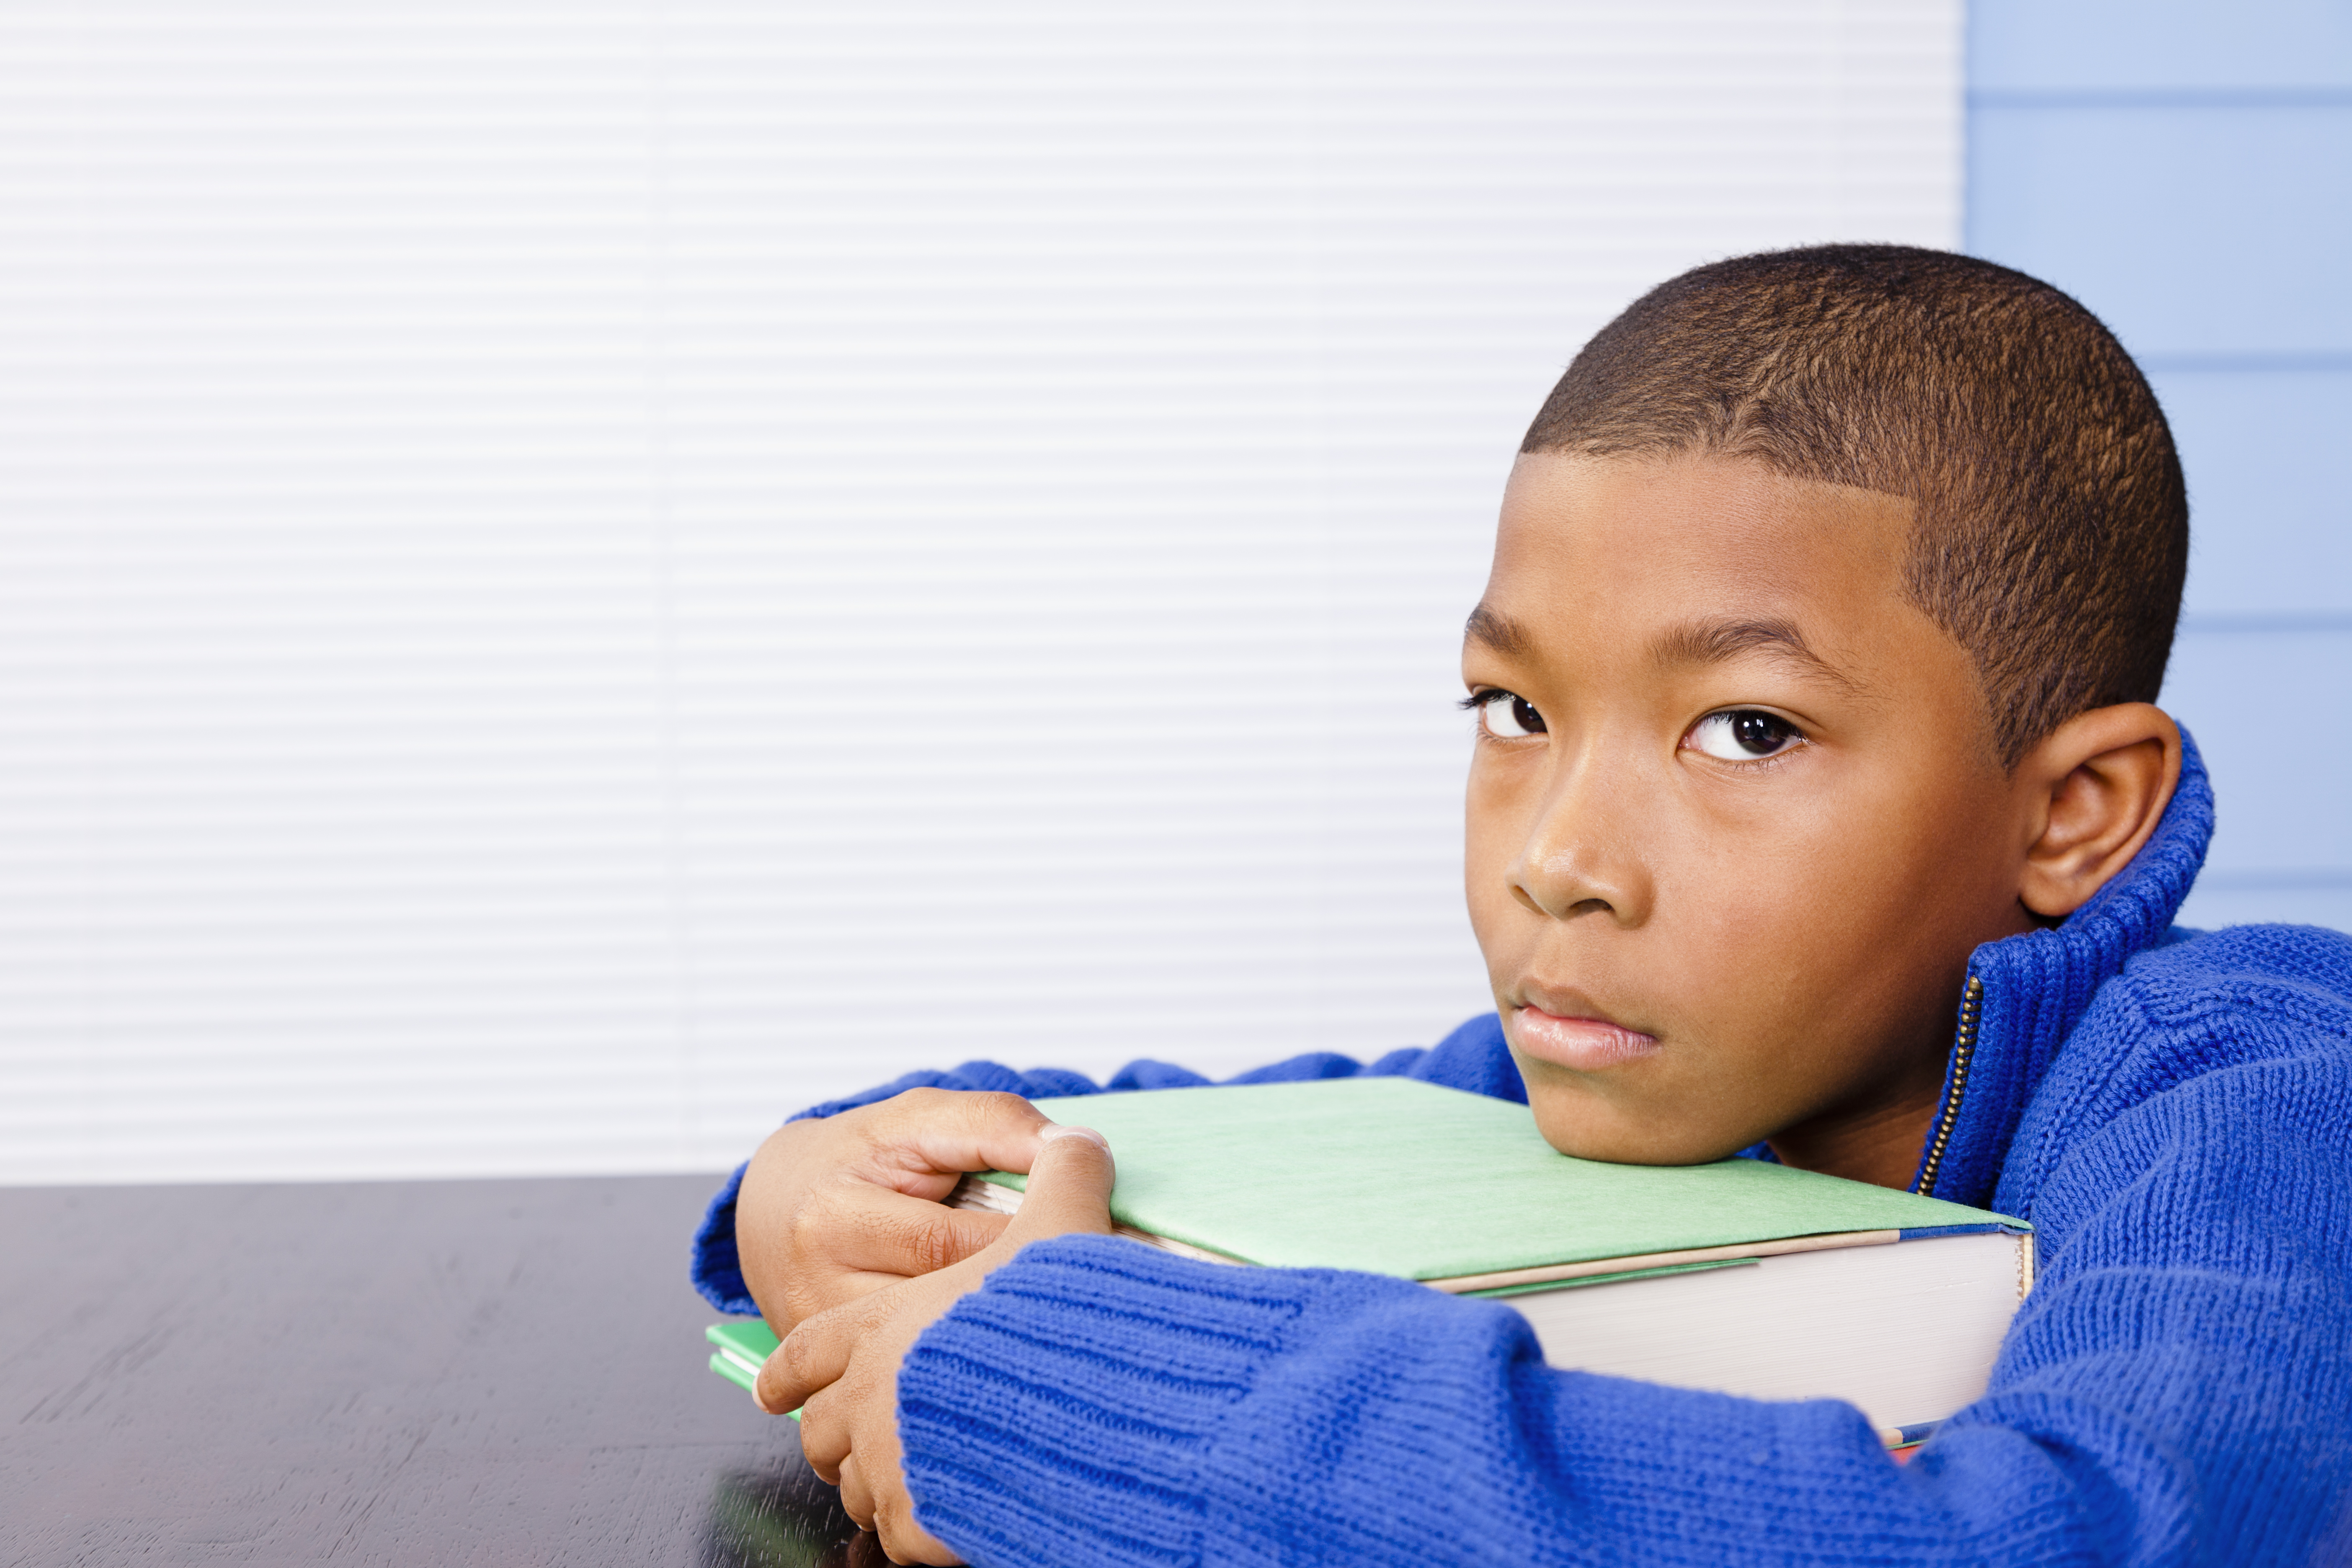 Young elementary aged boy procrastinating homework or depressed